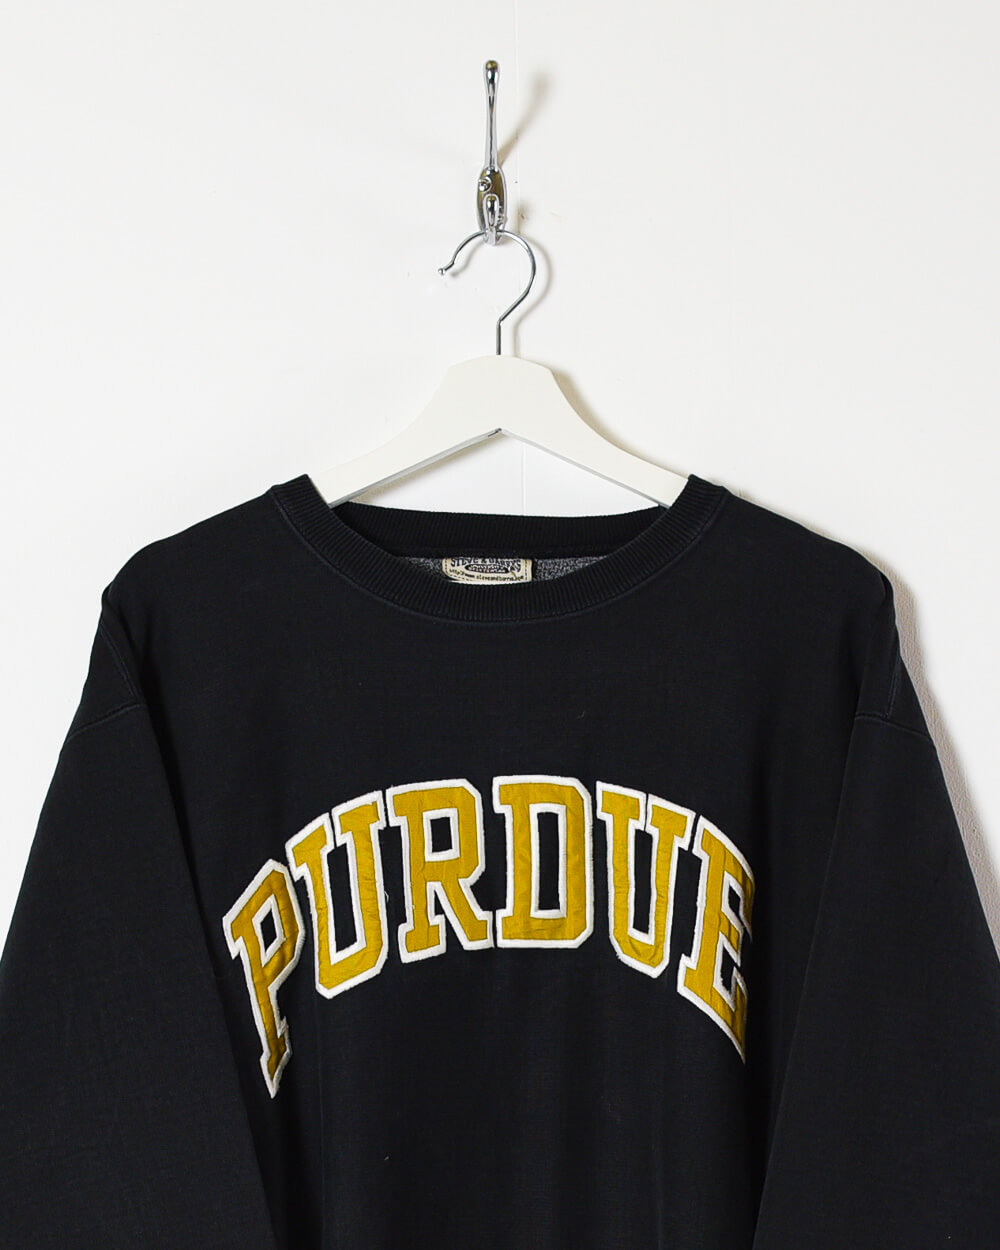 Black Steve and Barry's Purdue Sweatshirt - X-Large